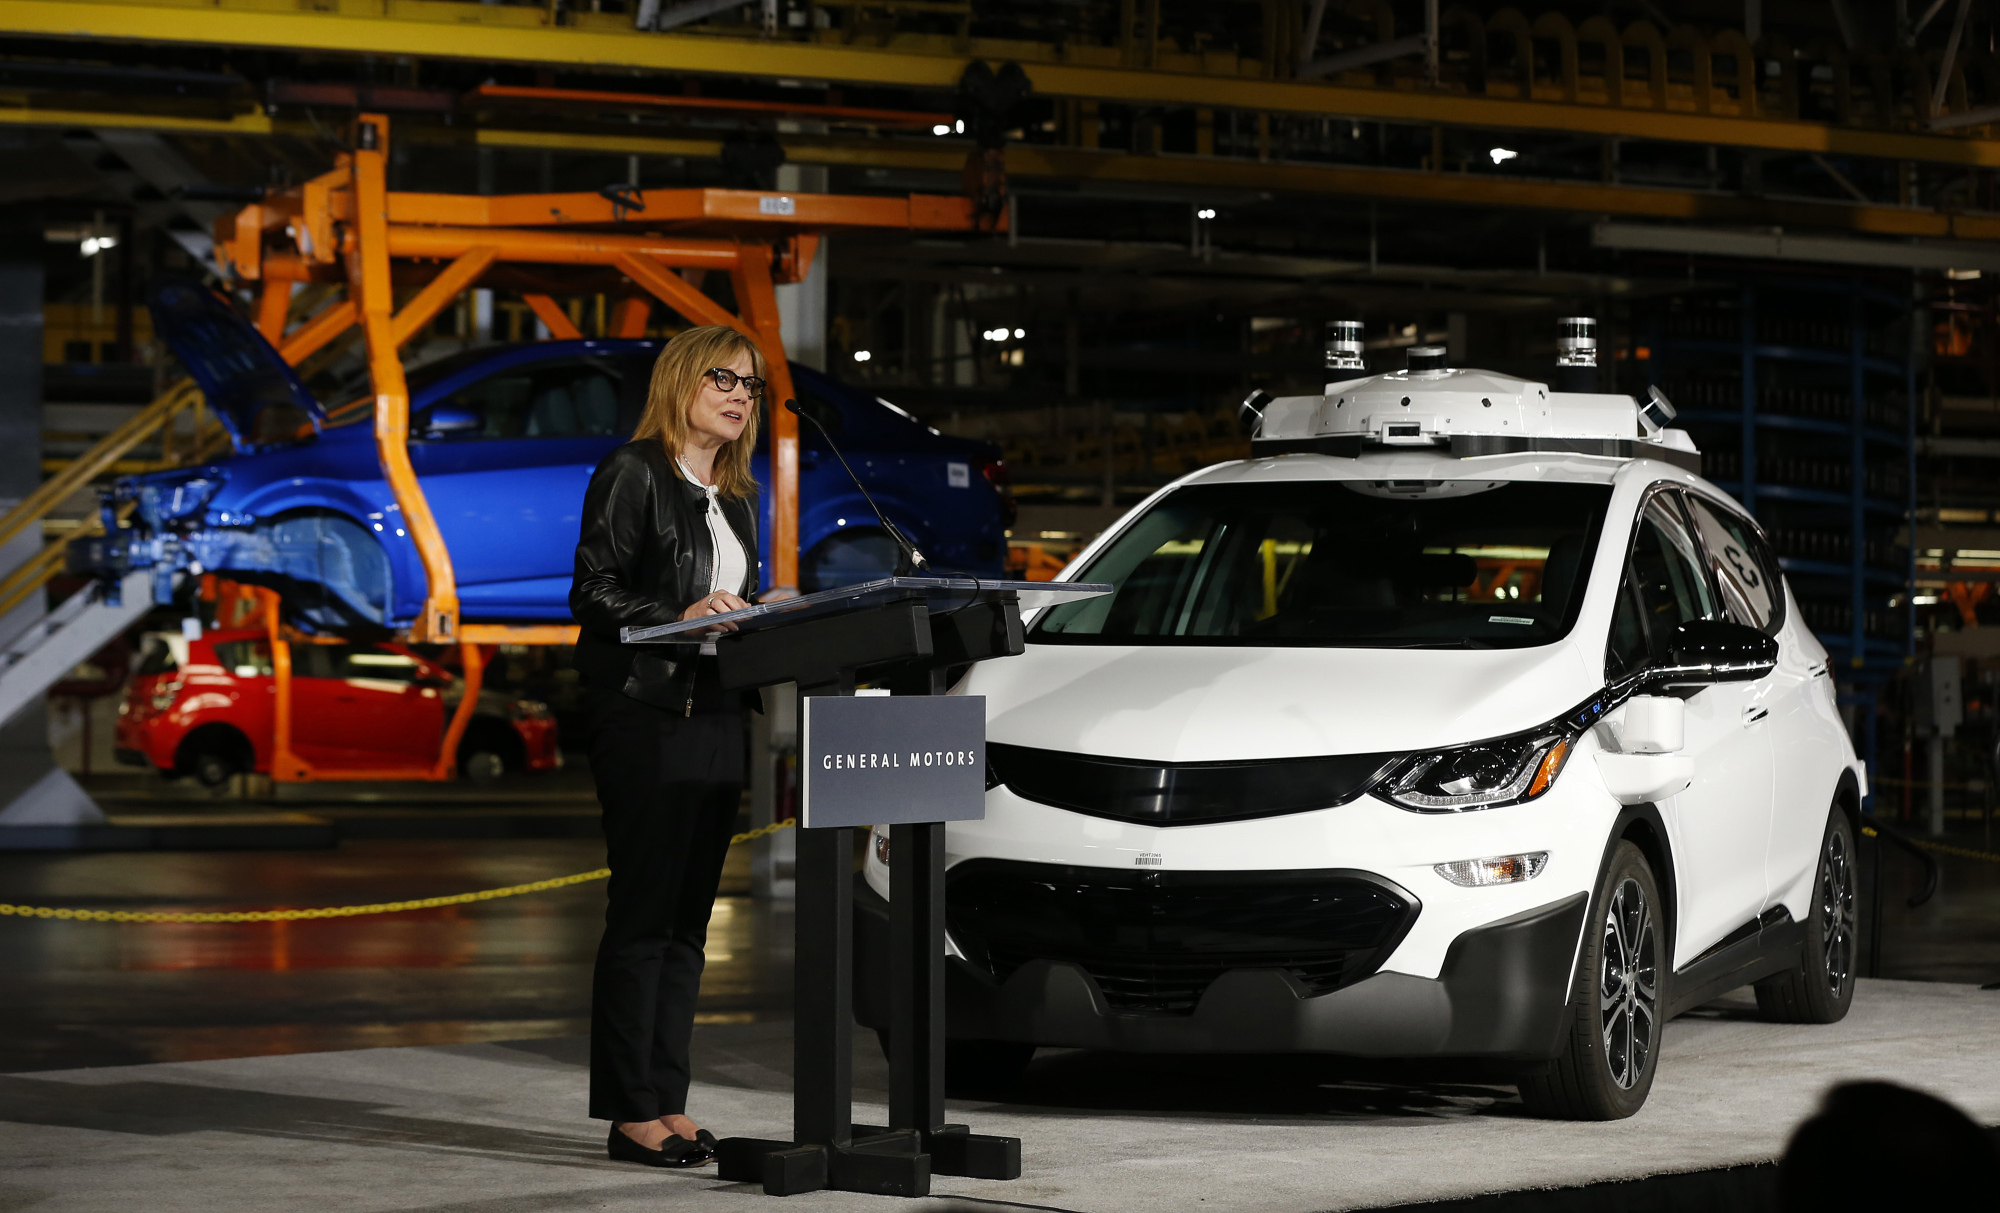 This Week's Car News: General Motors' Self-Driving Car, a New